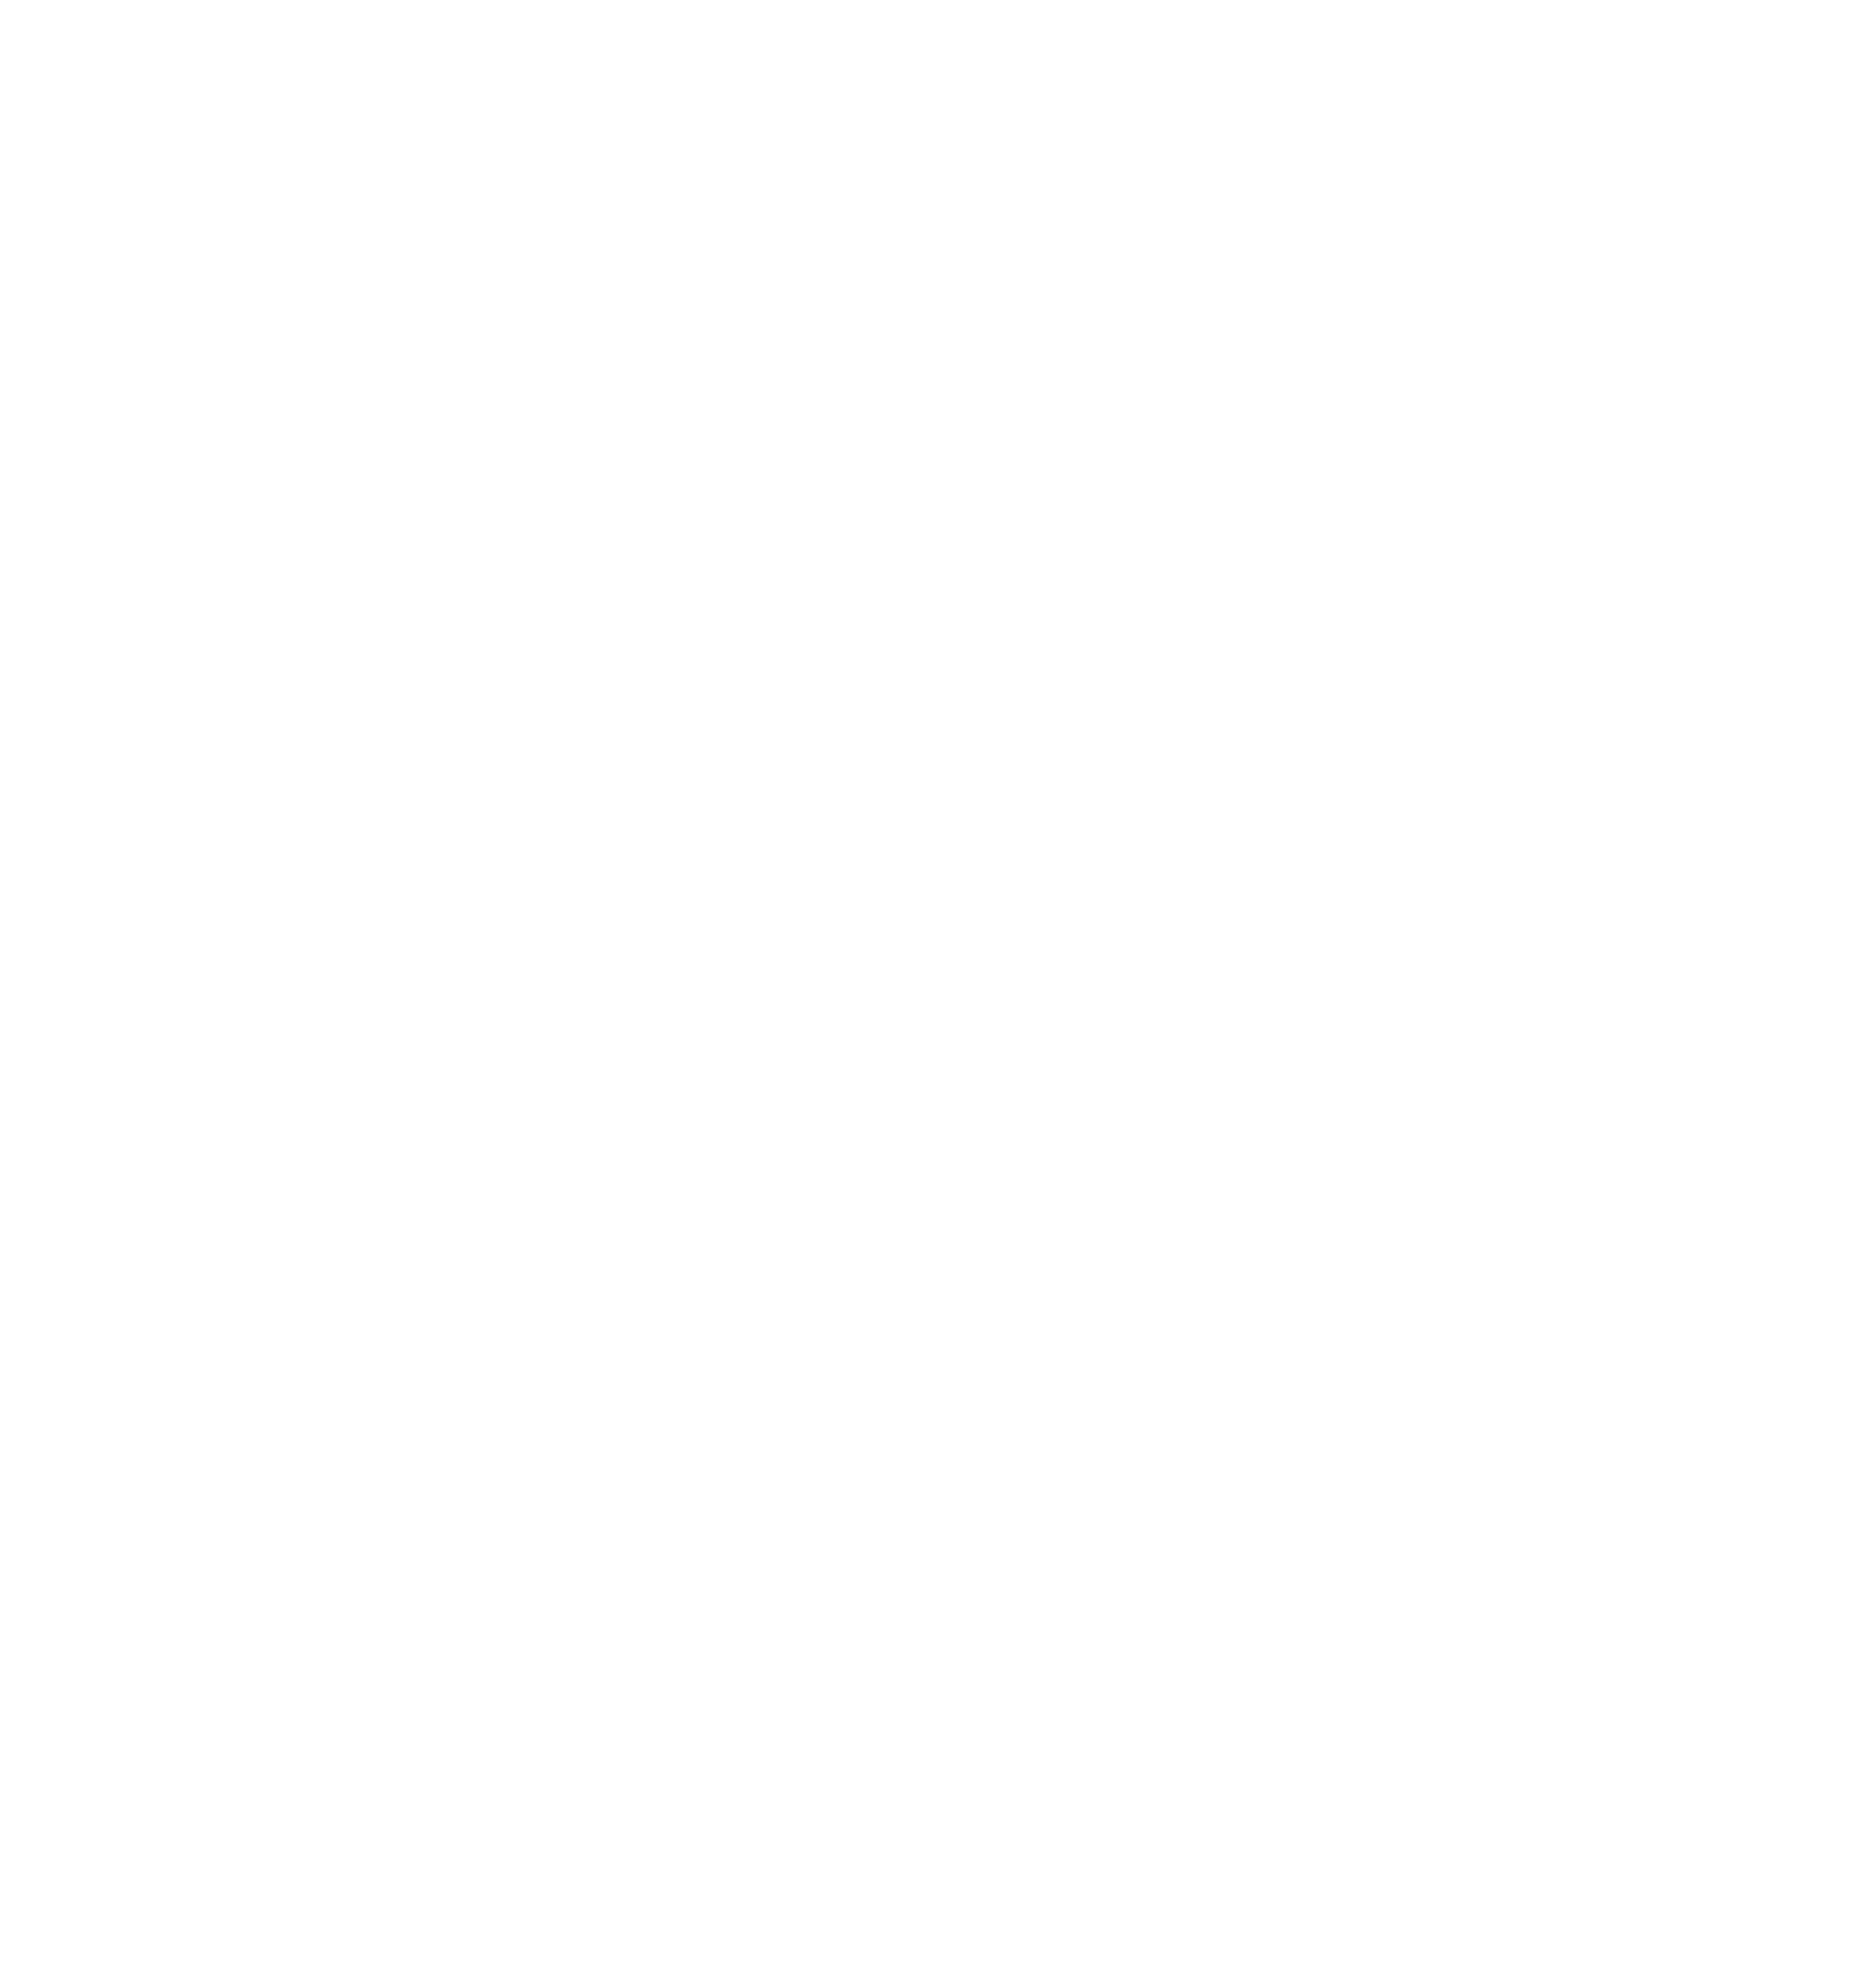 Advocate Lawyers